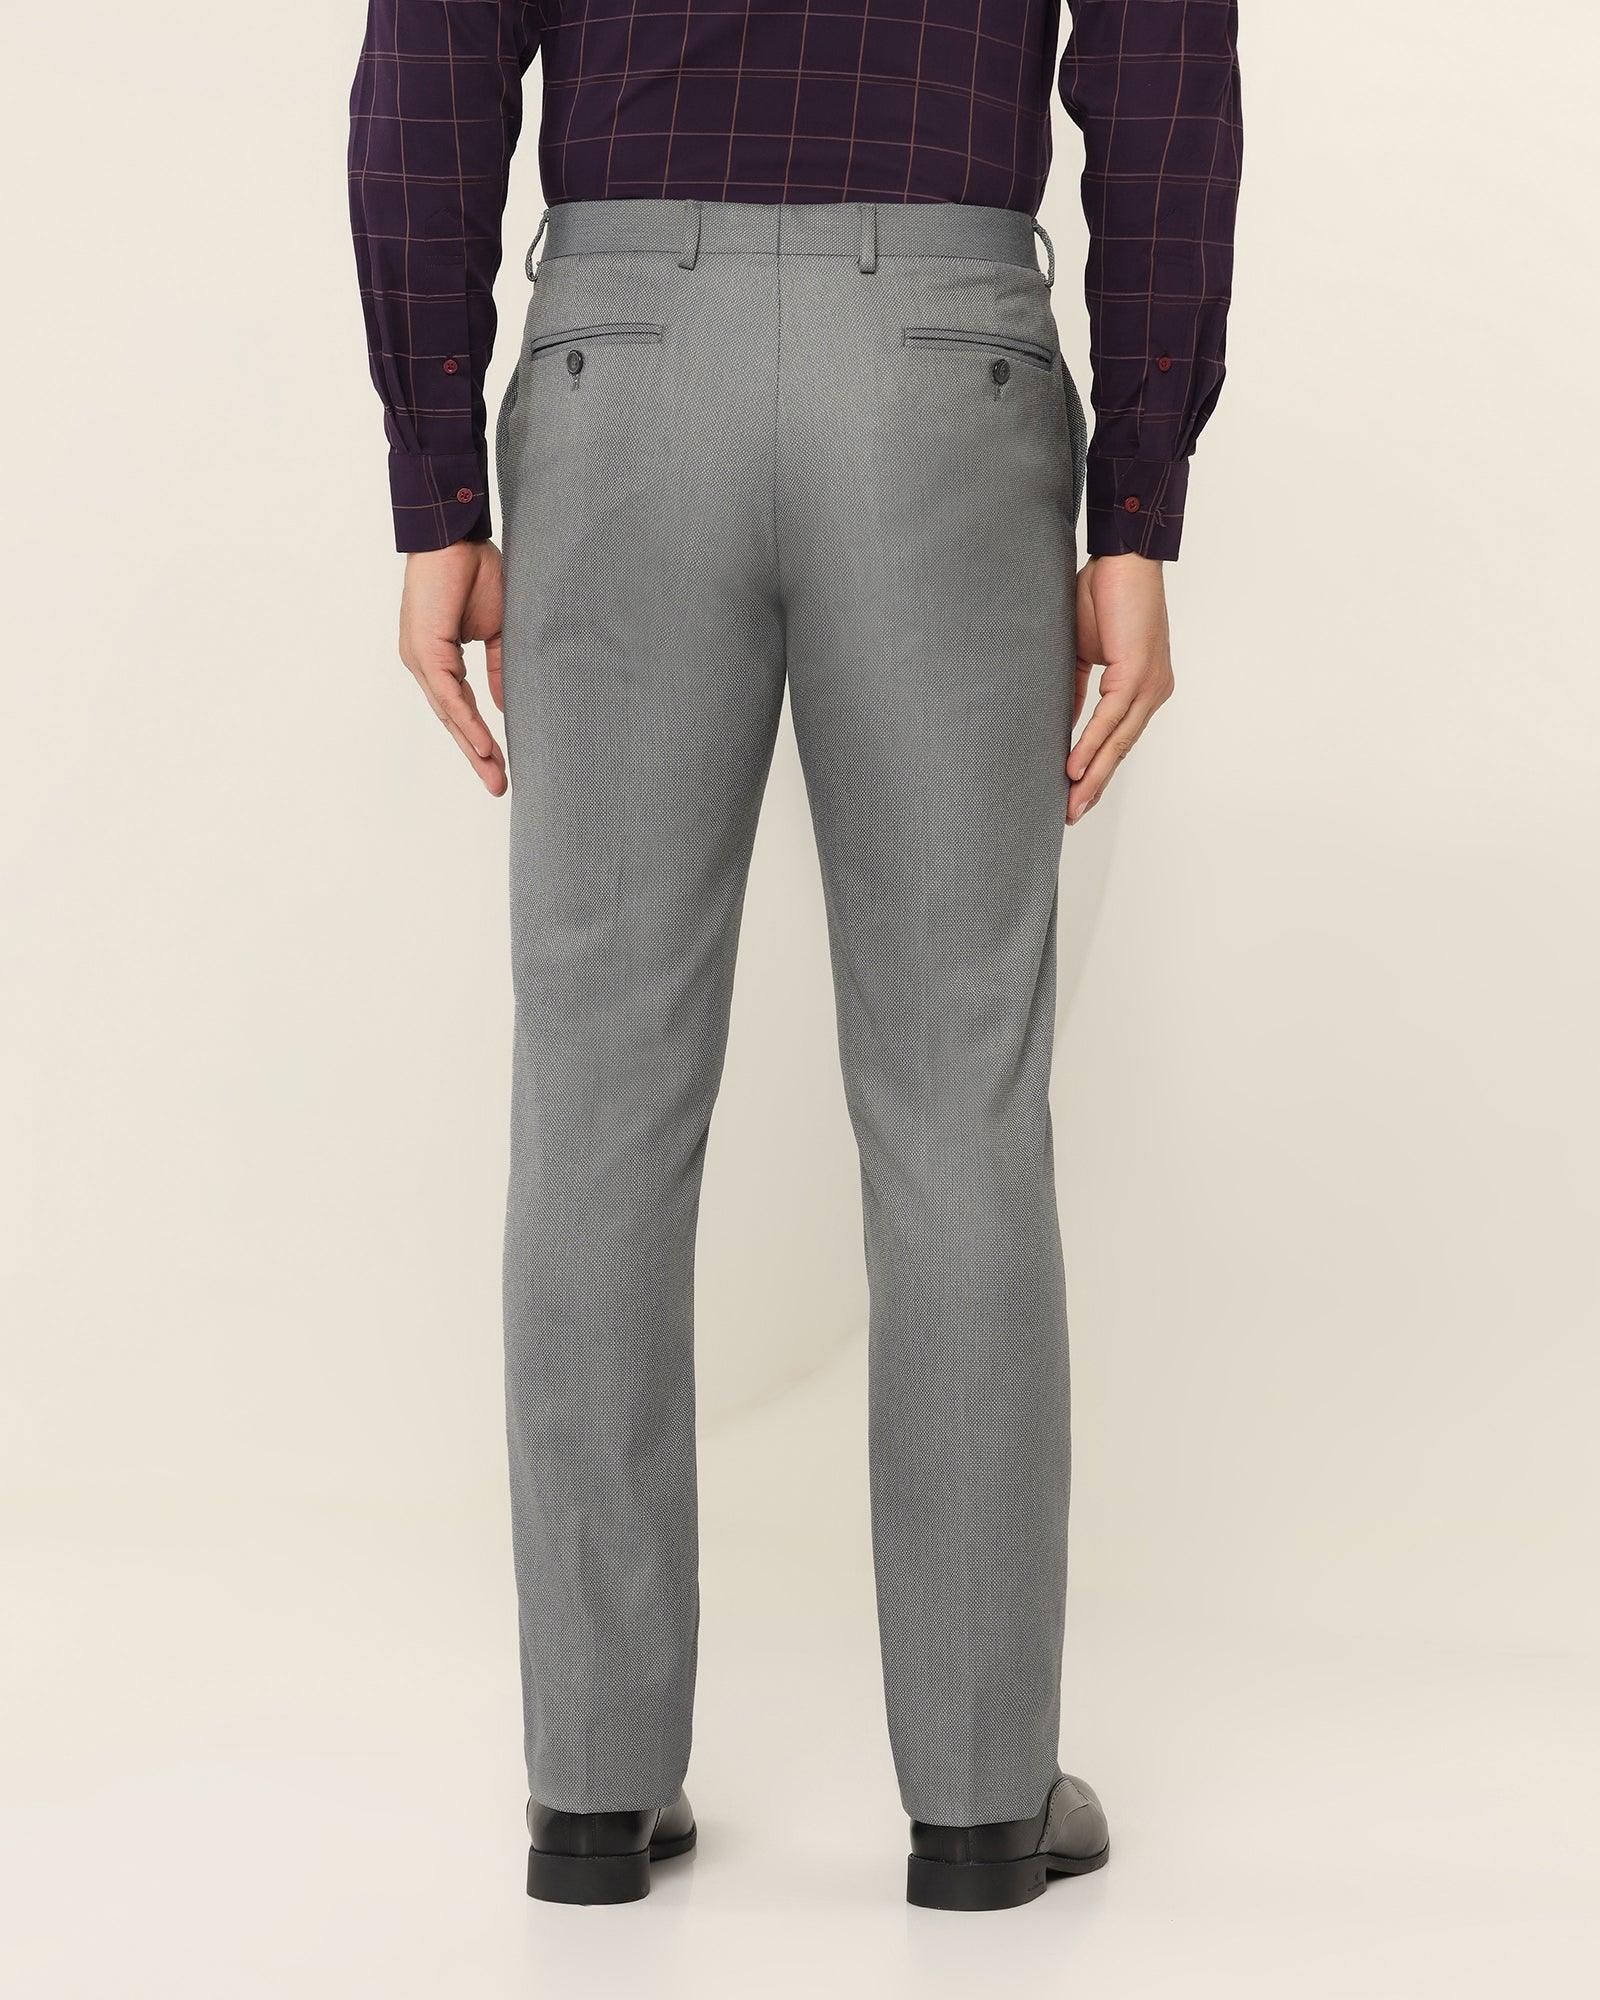 Grey Baleaf Trousers: Shop at £5.99+